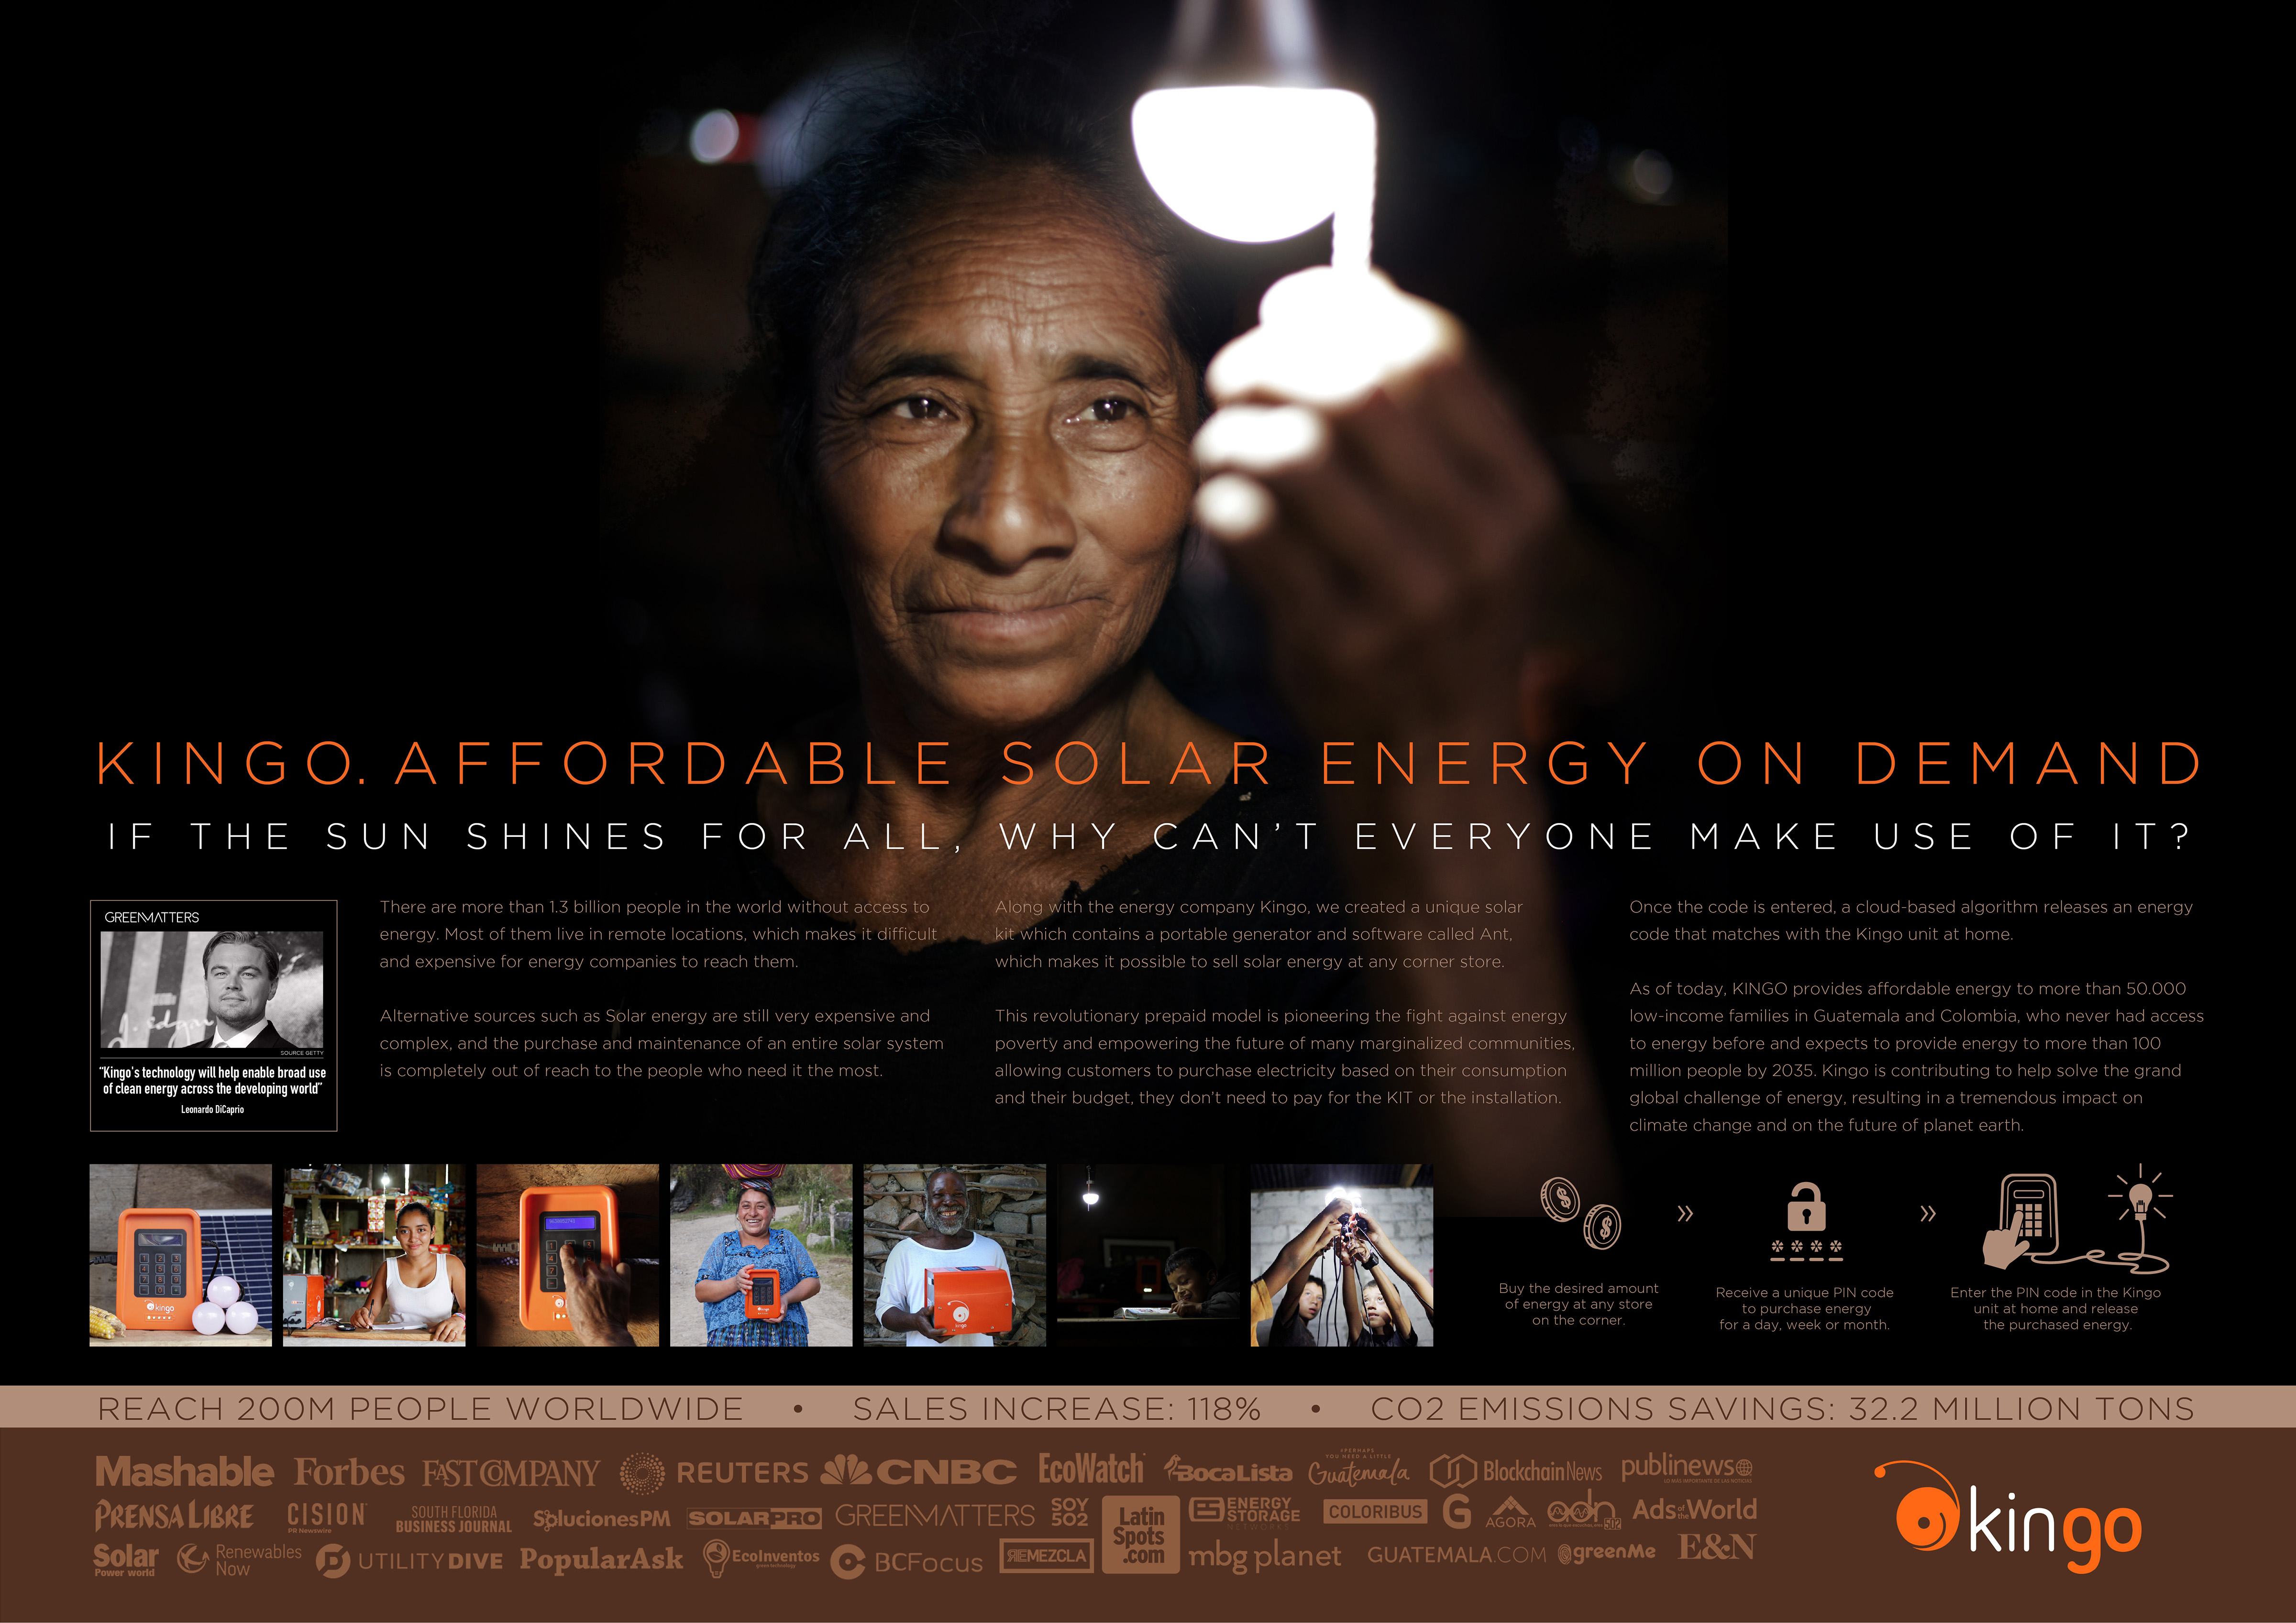 KINGO. affordable solar energy on demand